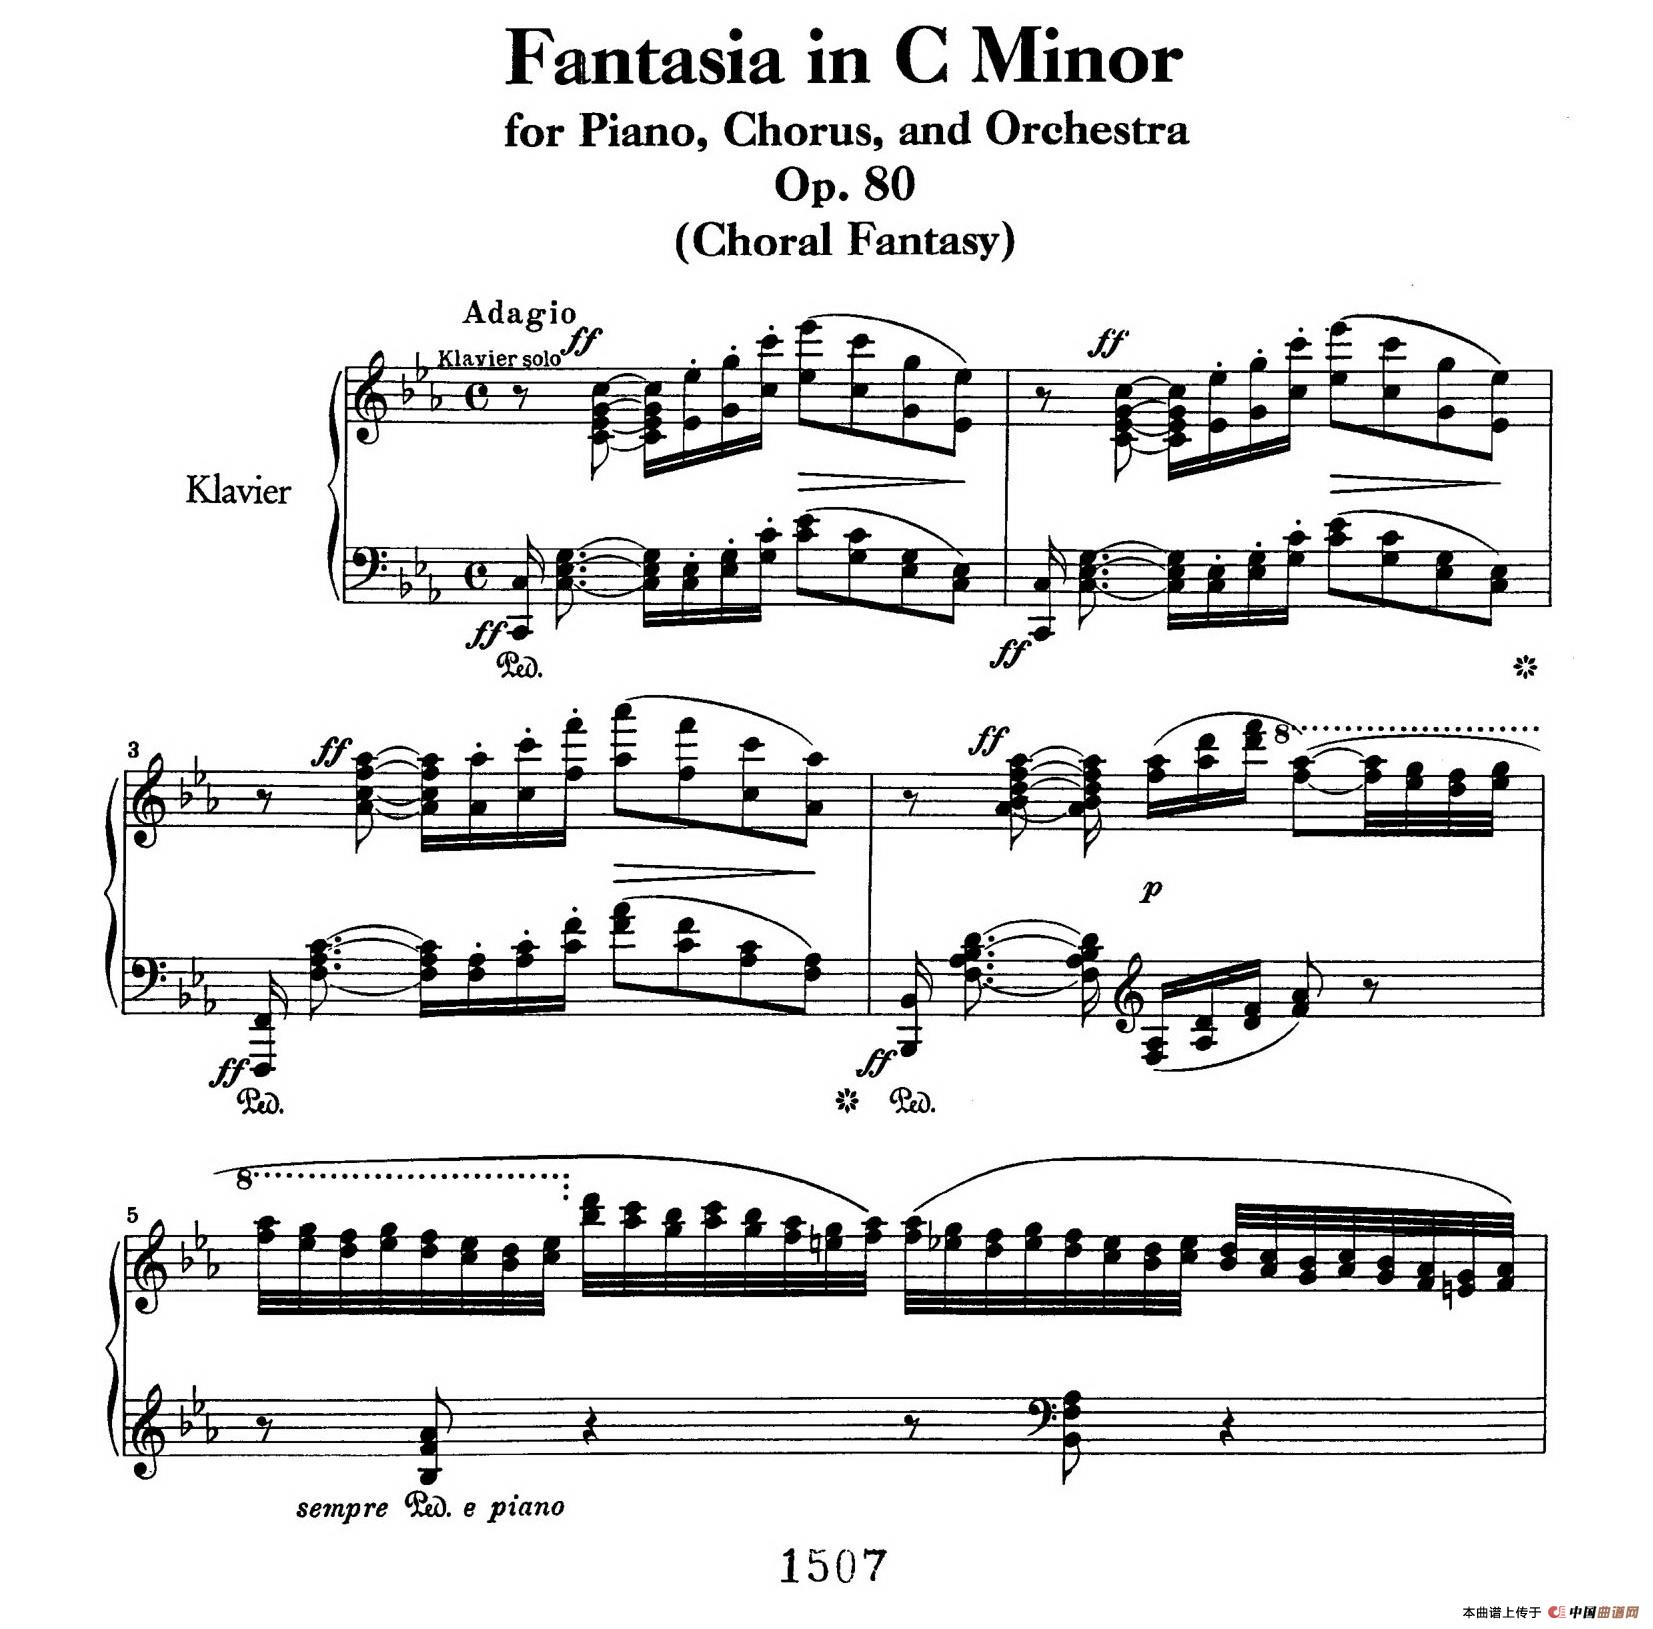 choral fantasia in c minor op.80钢琴谱(c小调合唱)